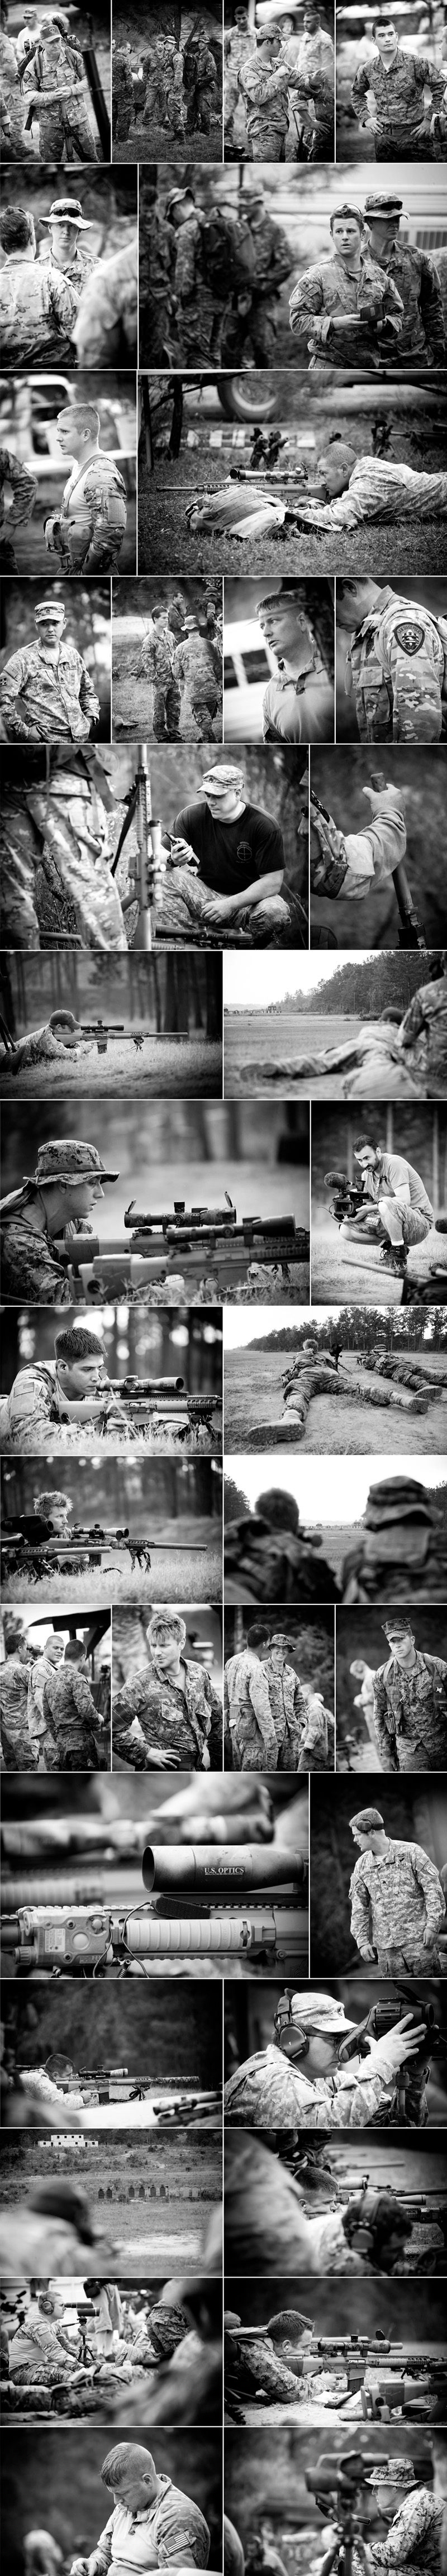 snipers-3.jpg